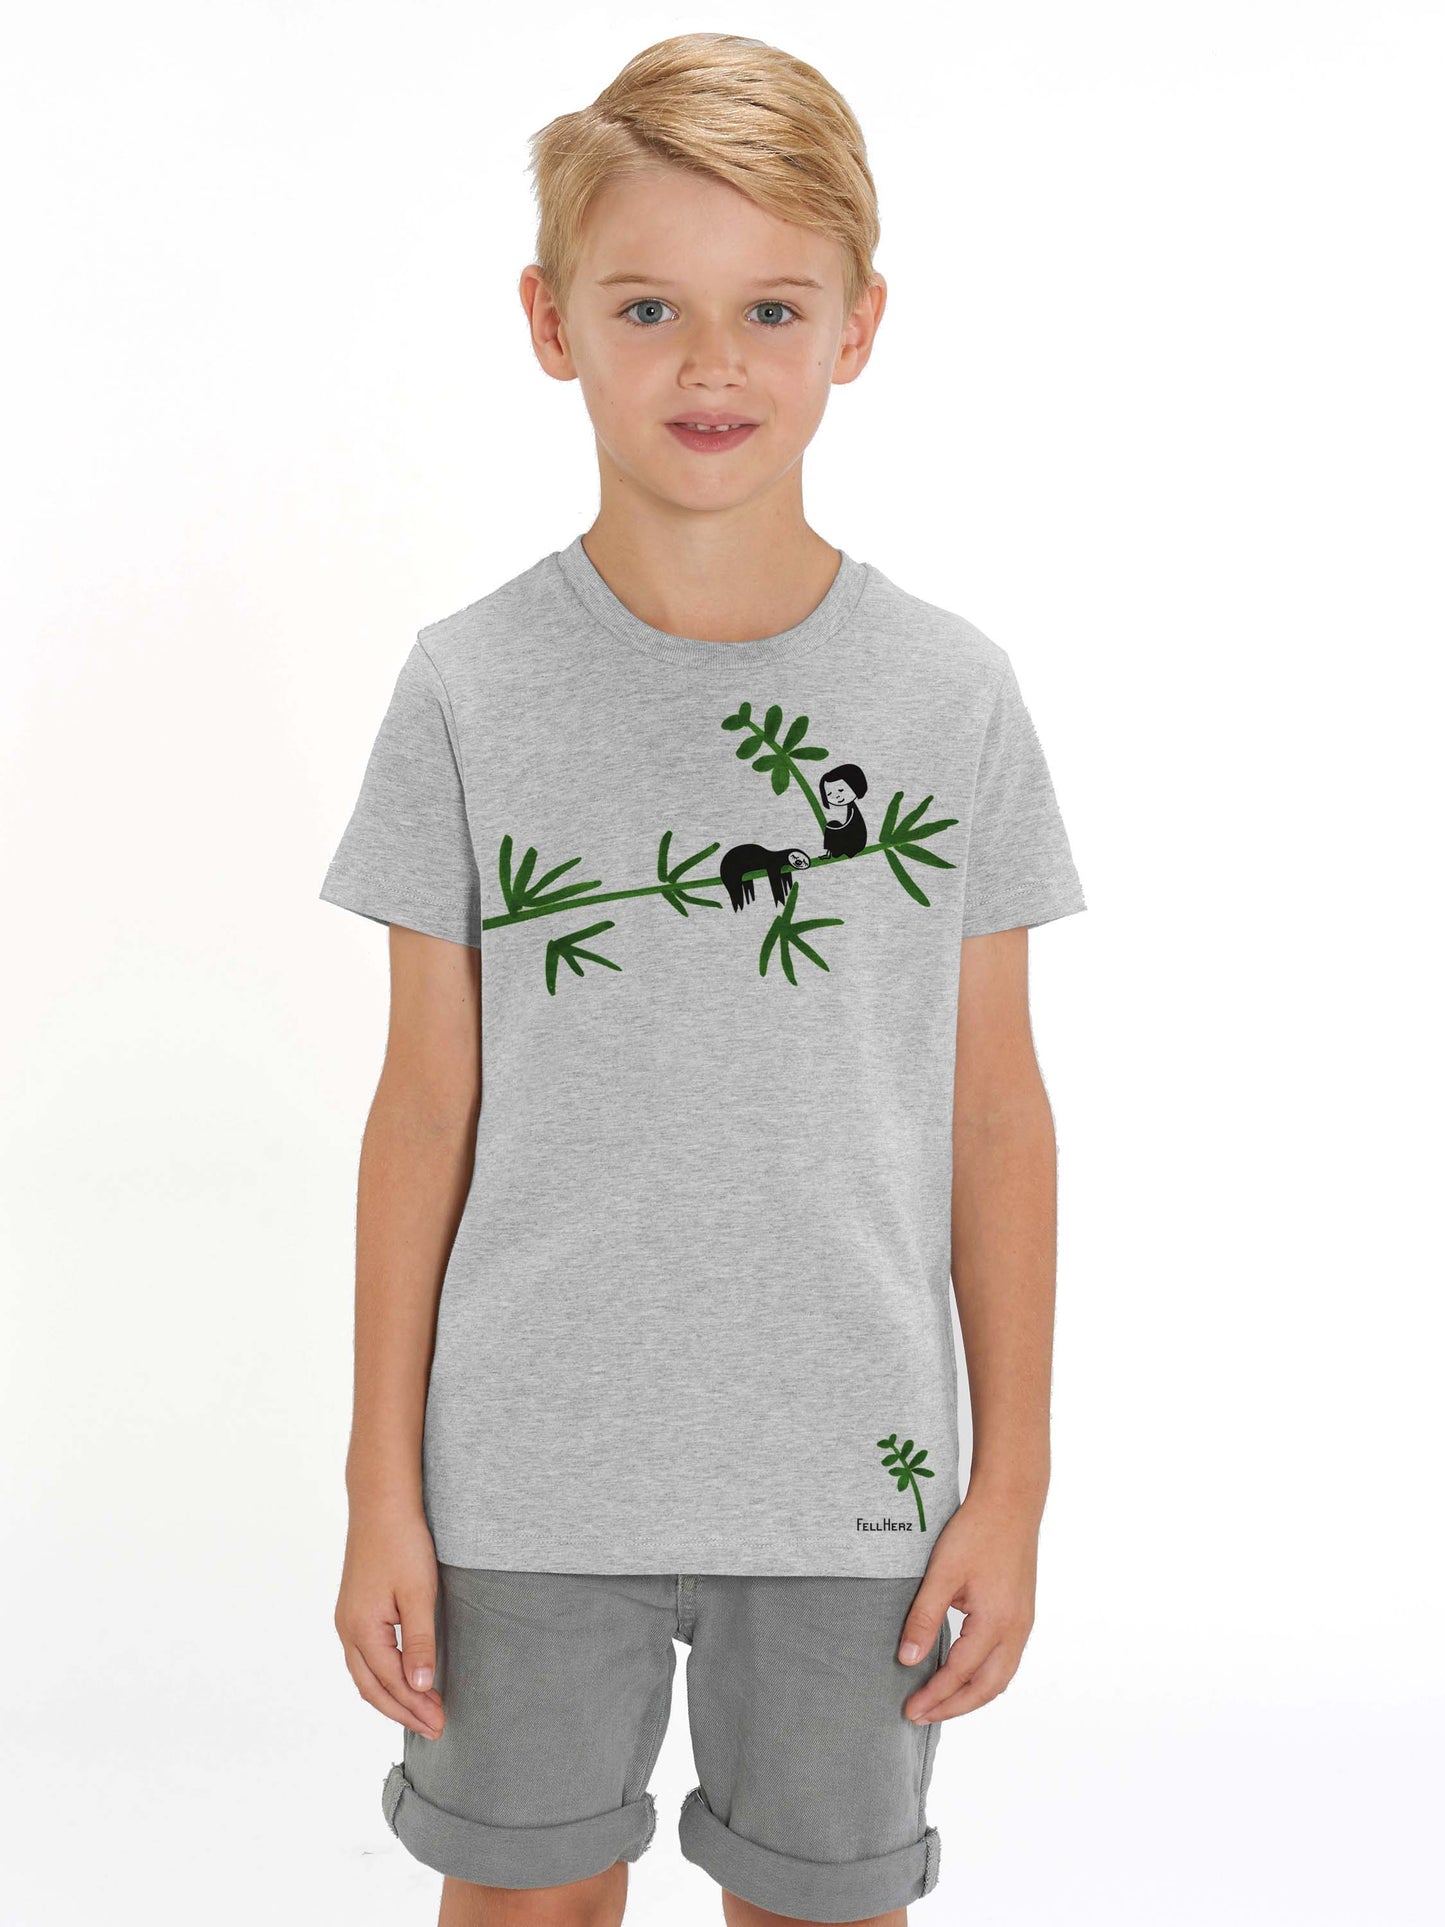 Sloth Kids T-Shirt gray melange